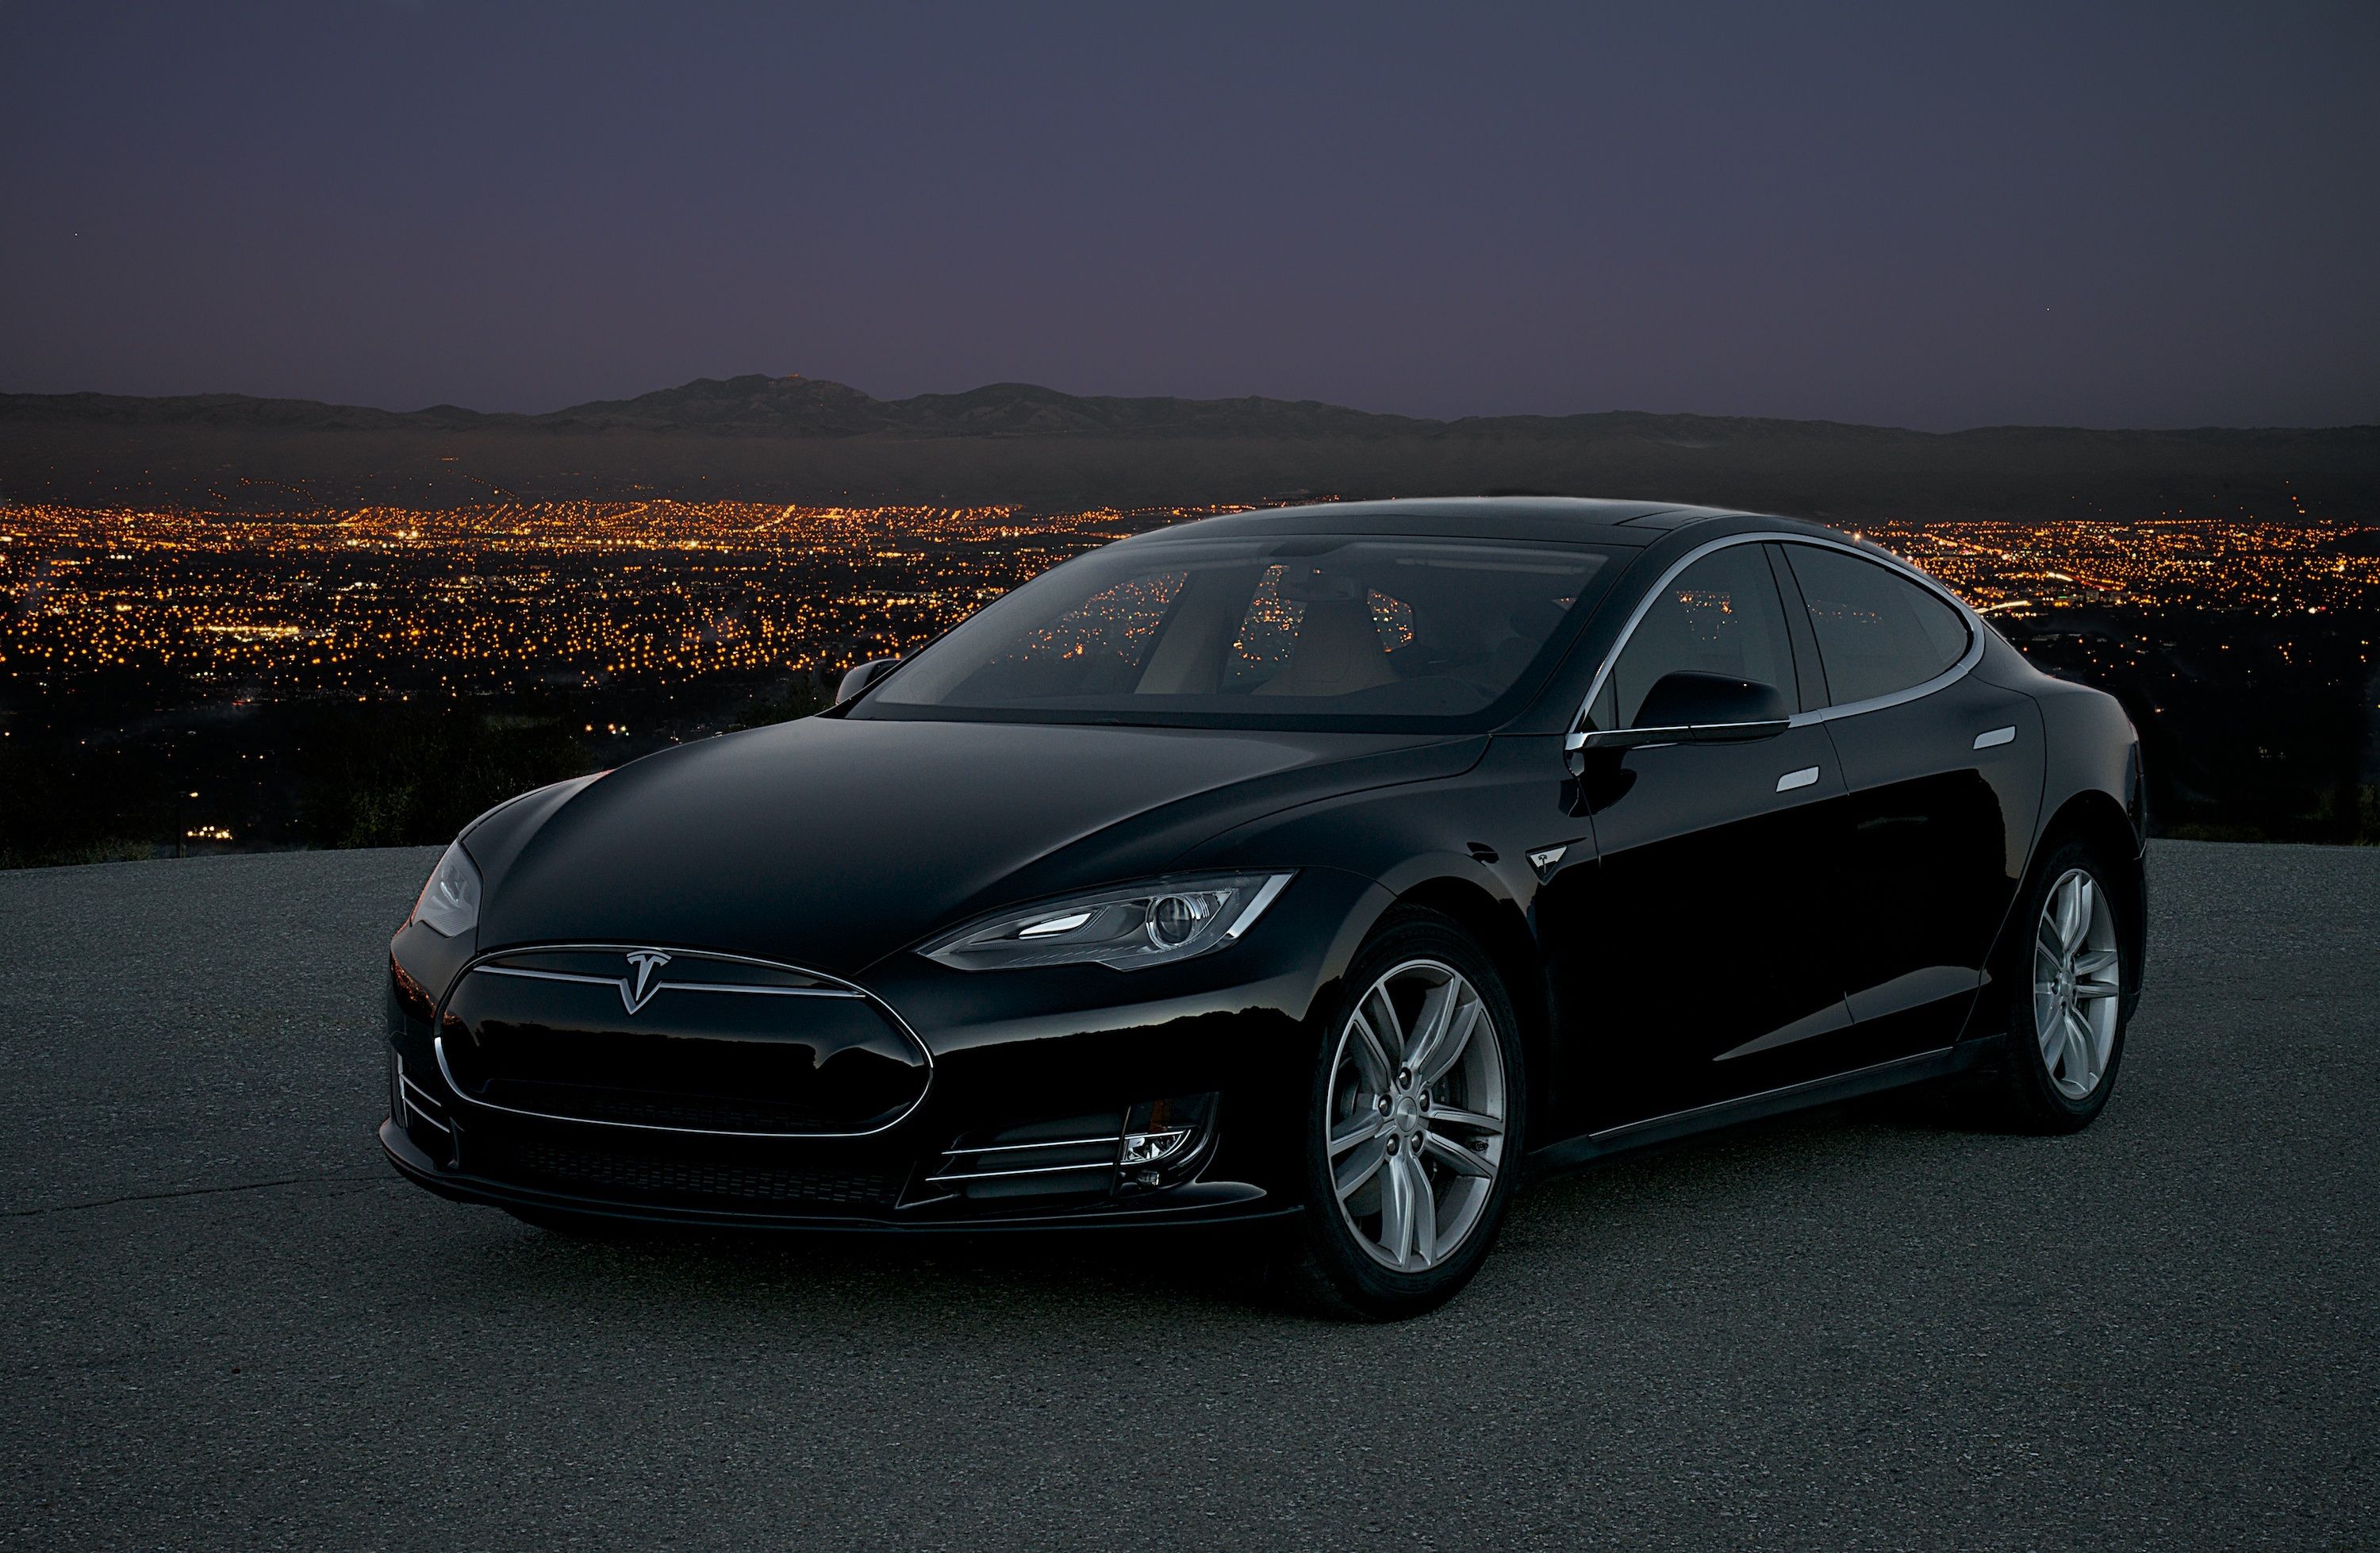 Tesla Model S Black Wallpaper HD Resolution. Tesla model s black, Tesla model s, Tesla